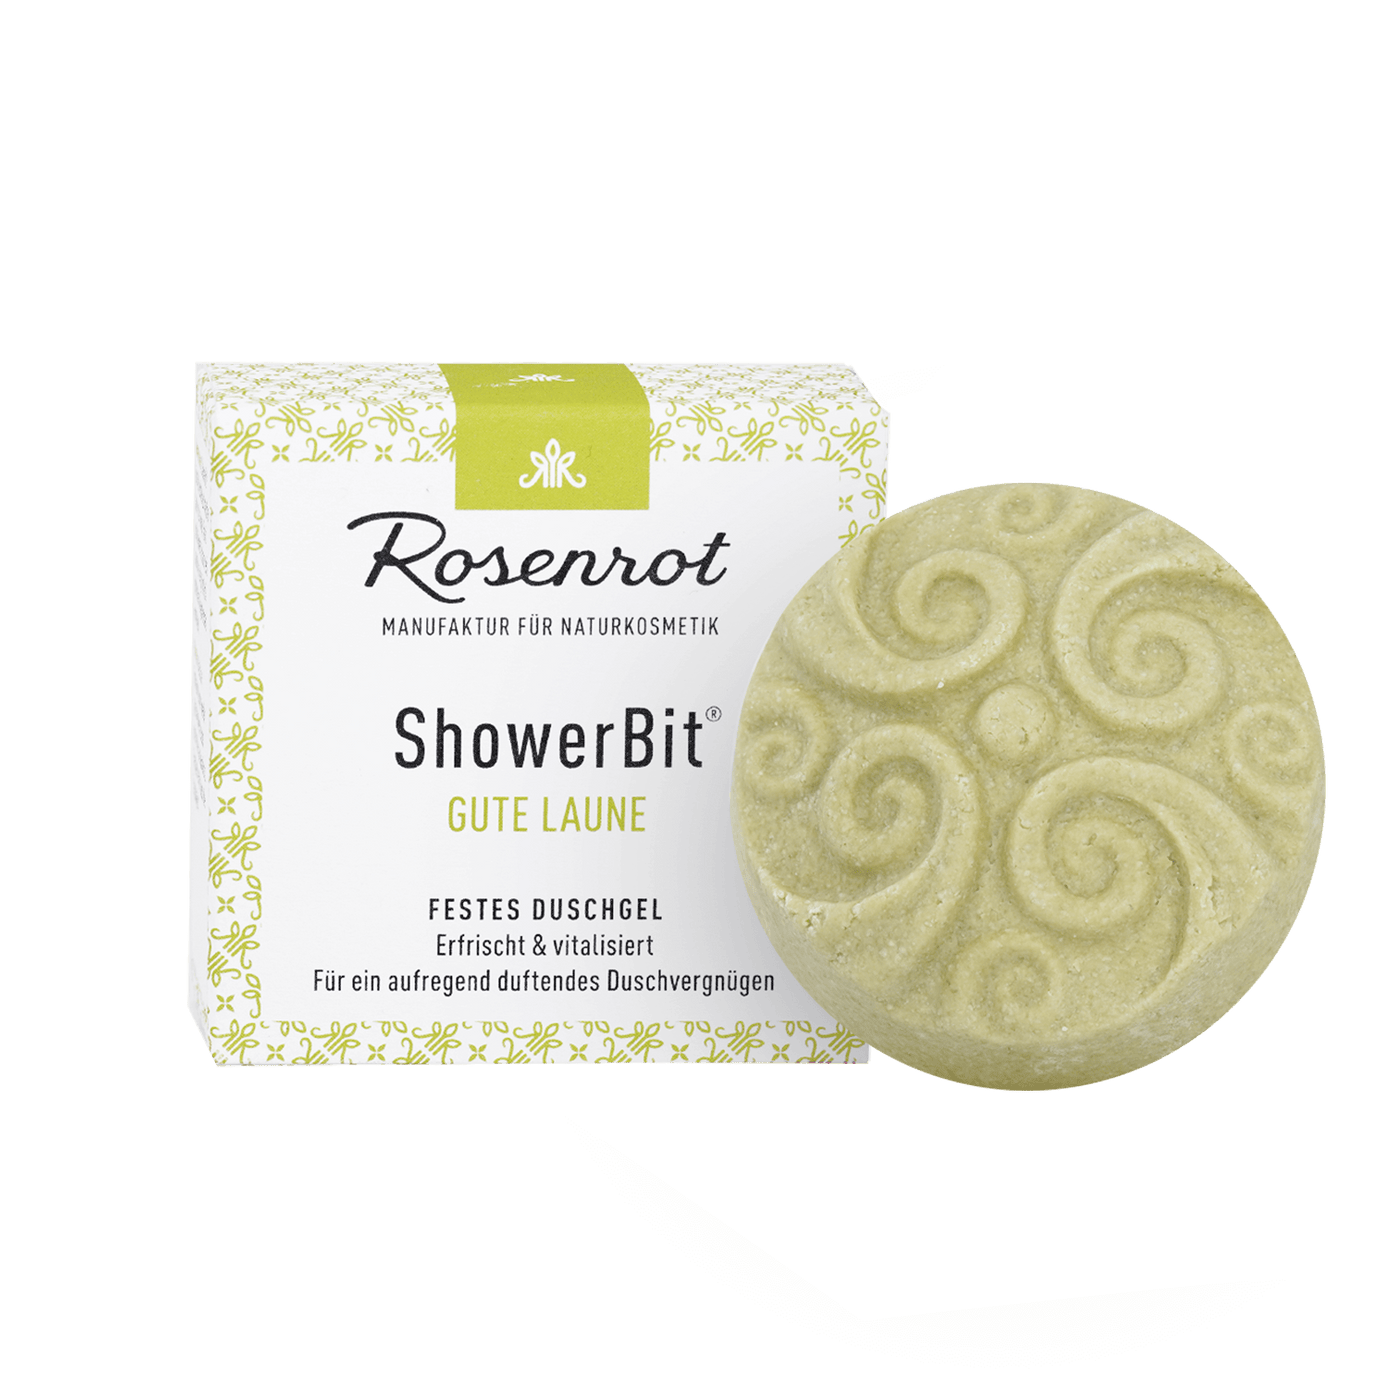 ShowerBit® Gute Laune